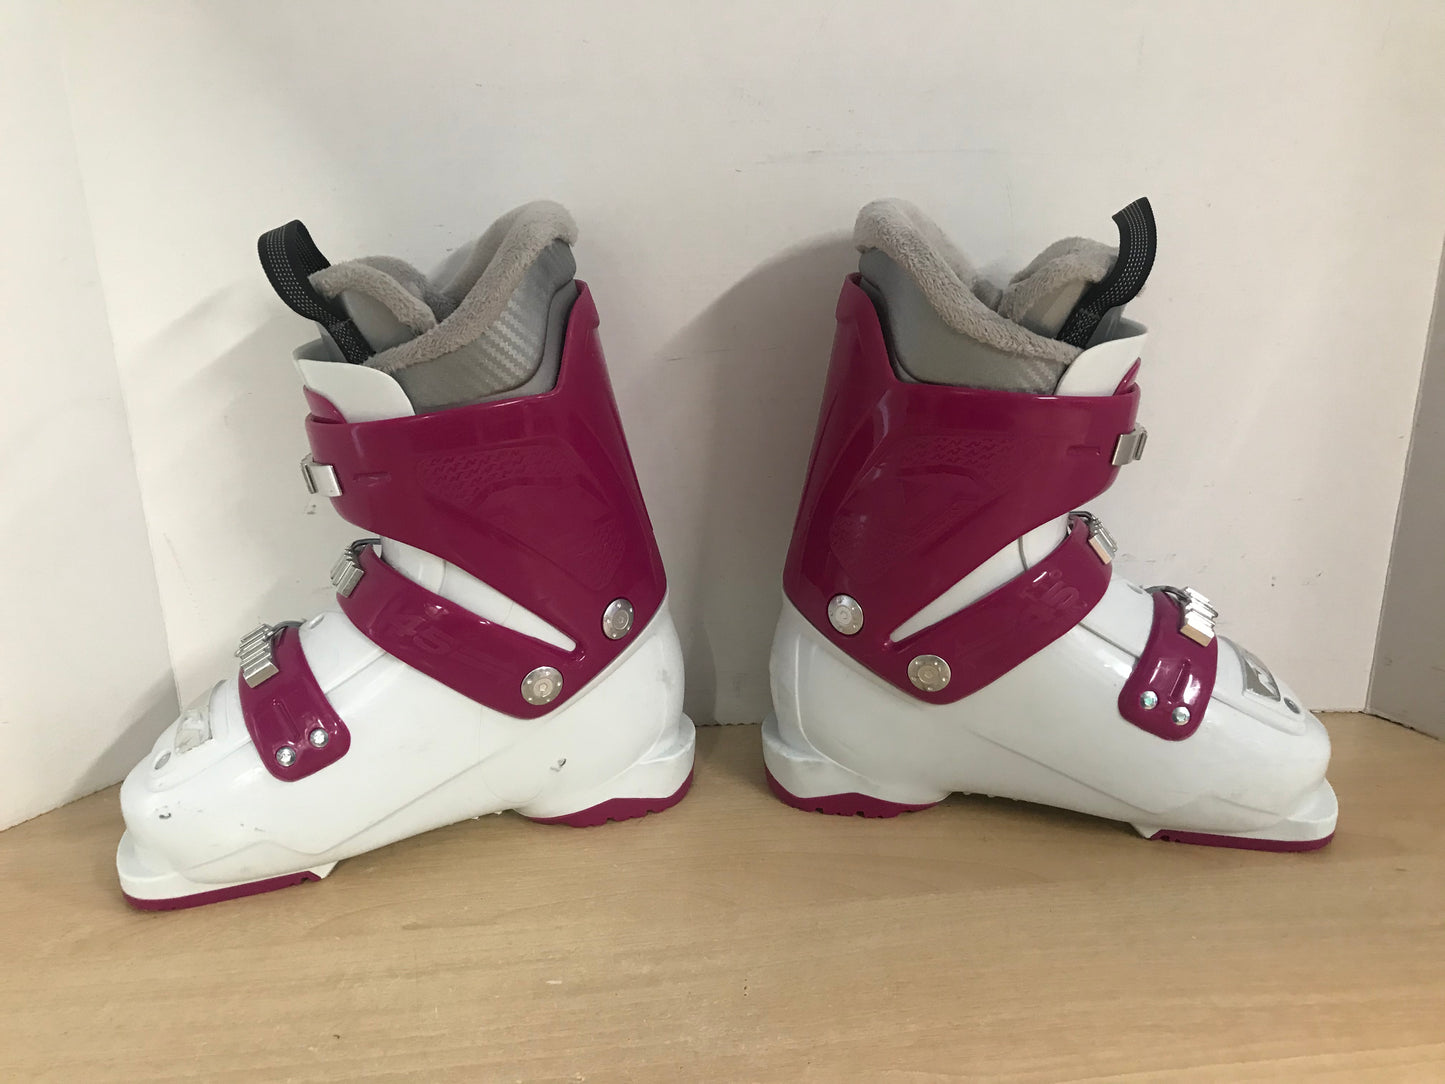 Ski Boots Mondo Size 21.5 Child Size 3-4 Shoe Size 255 mm Nordica Little Belle 3 White Pink Blue New Demo Model